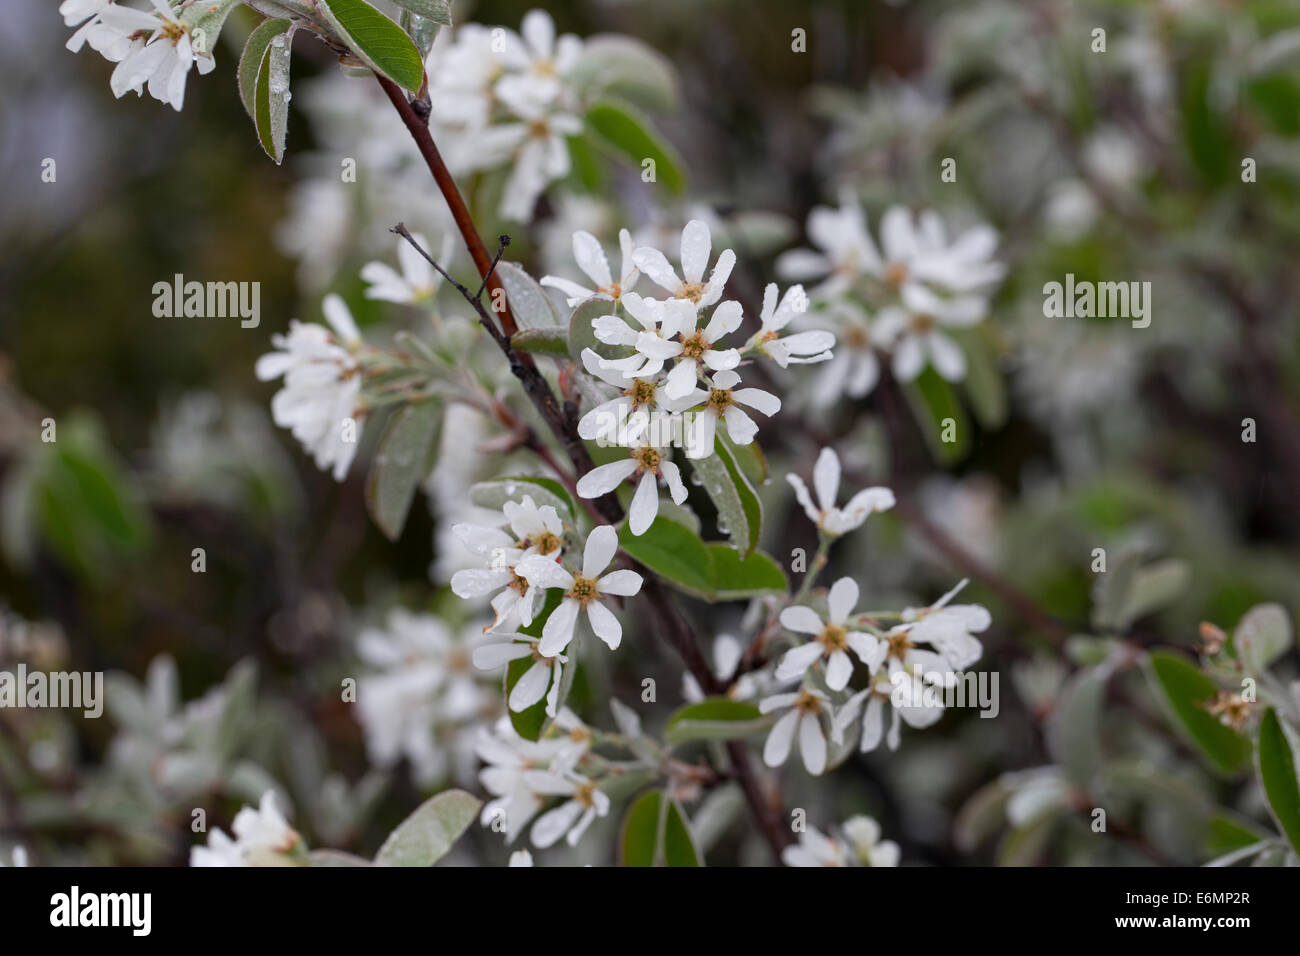 Snowy Mespilus, shadbush, shadwood, wild pear, Echte Felsenbirne, Felsenmispel, Amelanchier ovalis, Amelanchier vulgaris Stock Photo